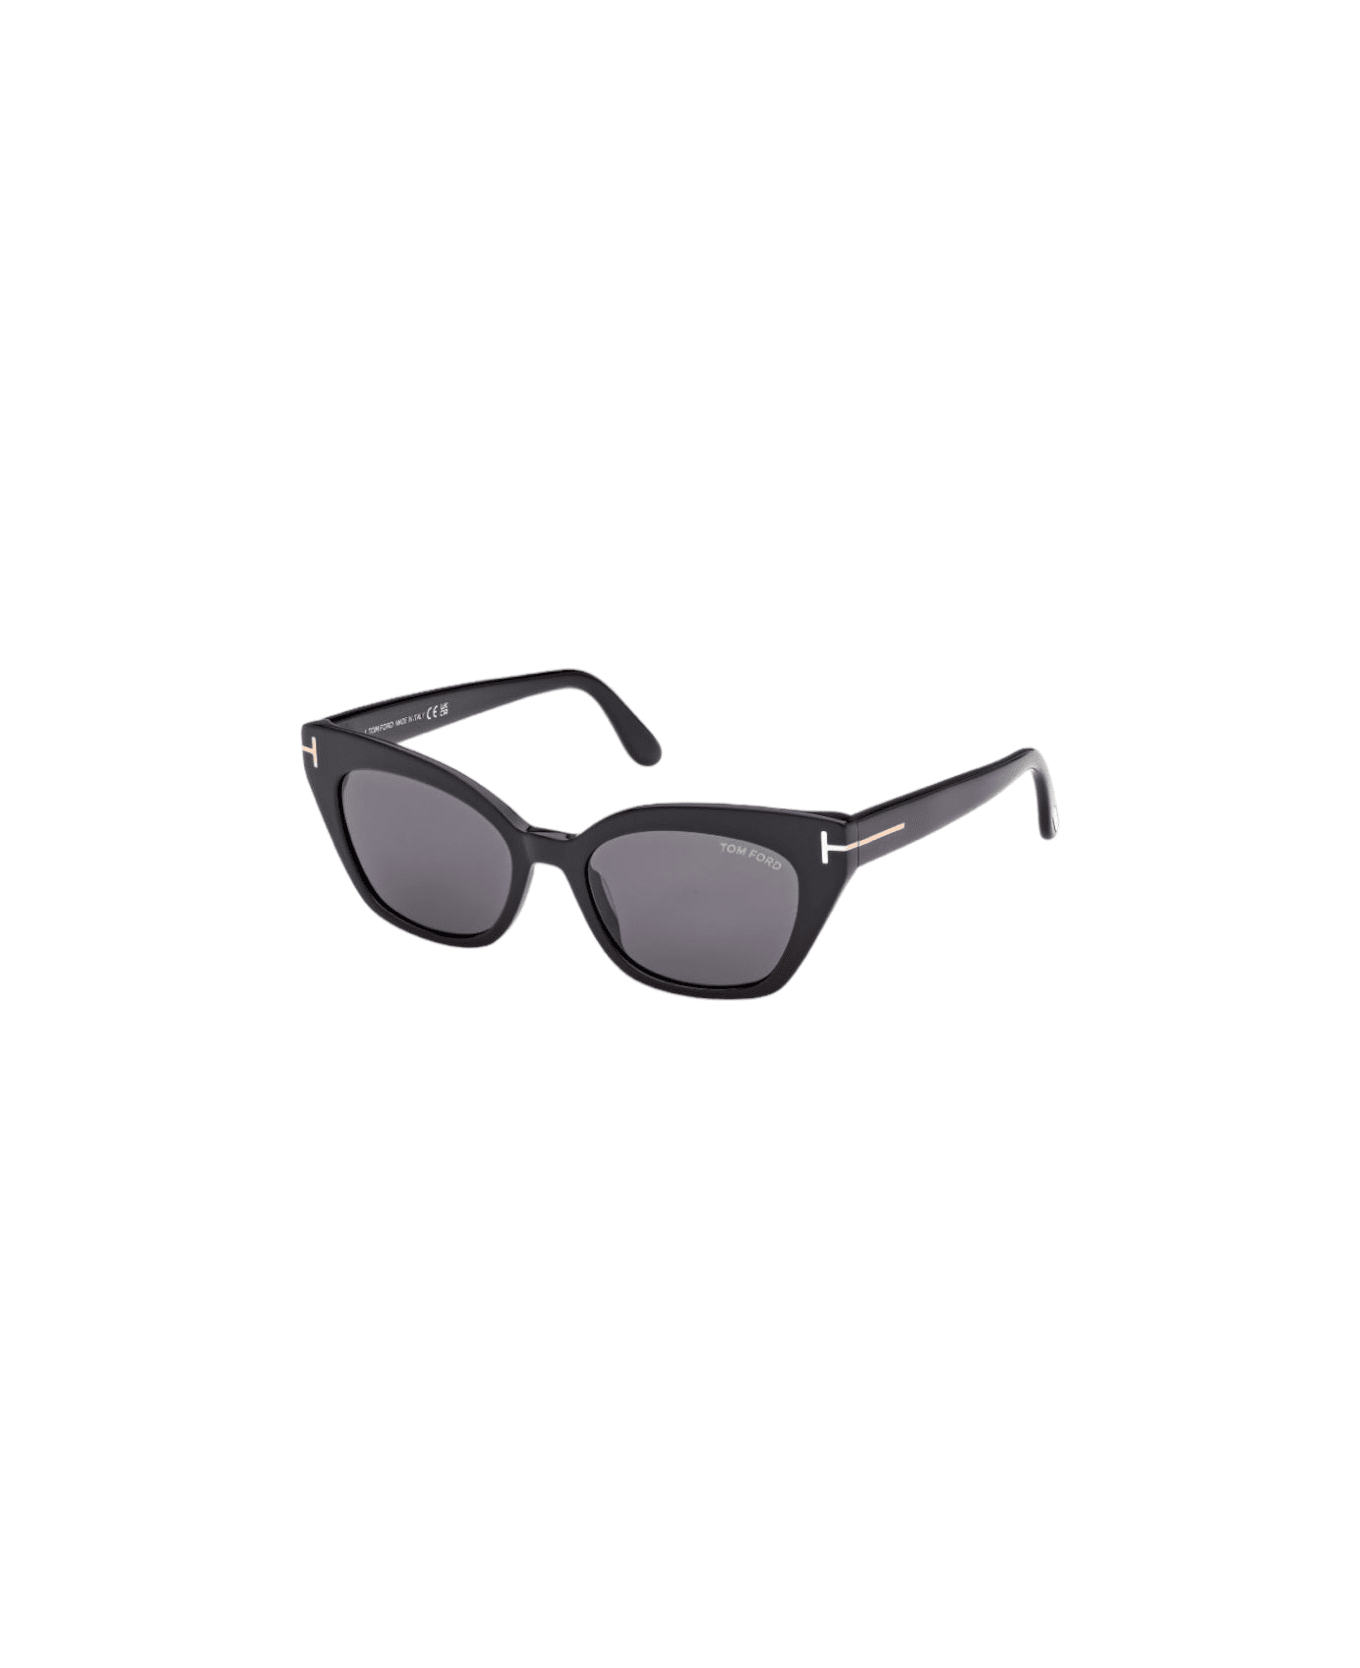 Tom Ford Eyewear Juliette - Ft 1031 /s Sunglasses